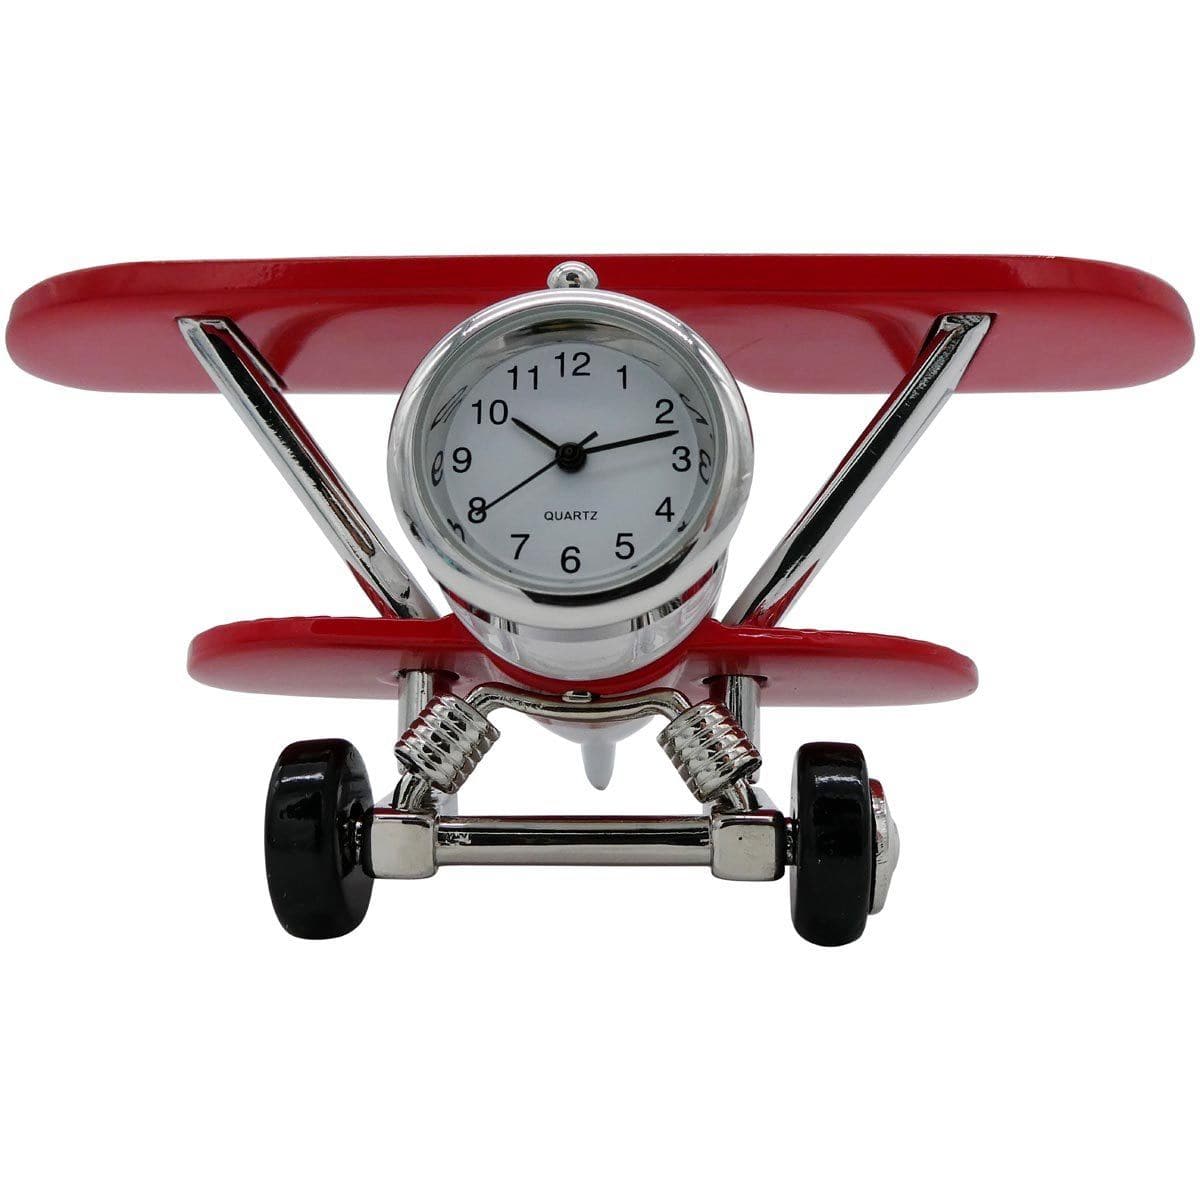 Pilot Toys White and Red Biplane Desk Clock